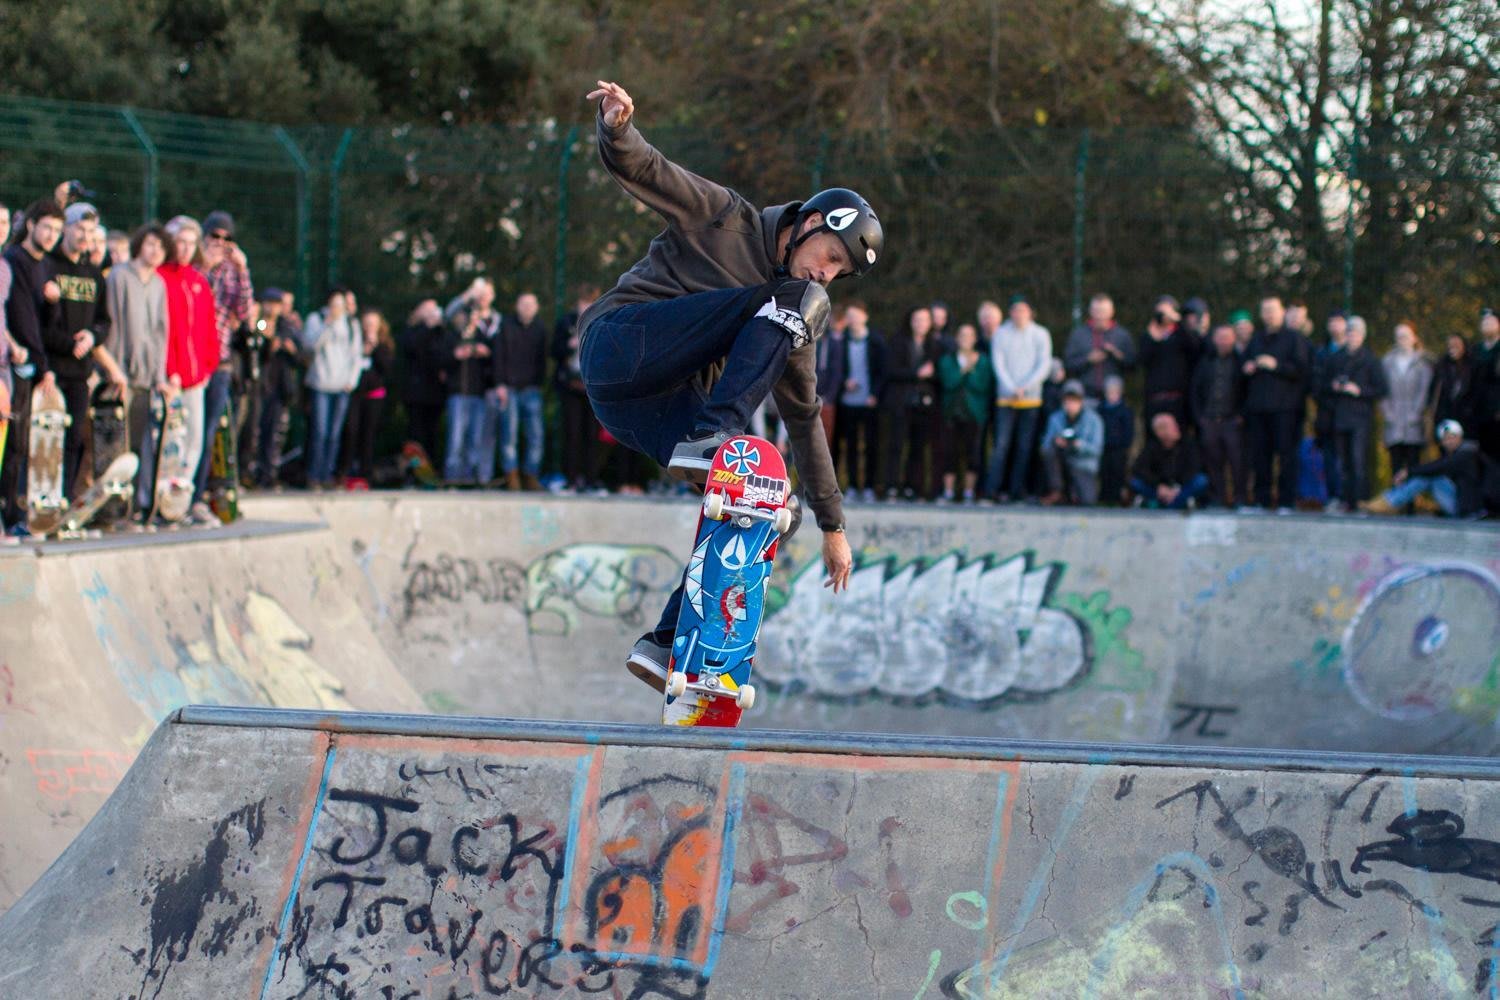 Tony Hawk Skateboarding